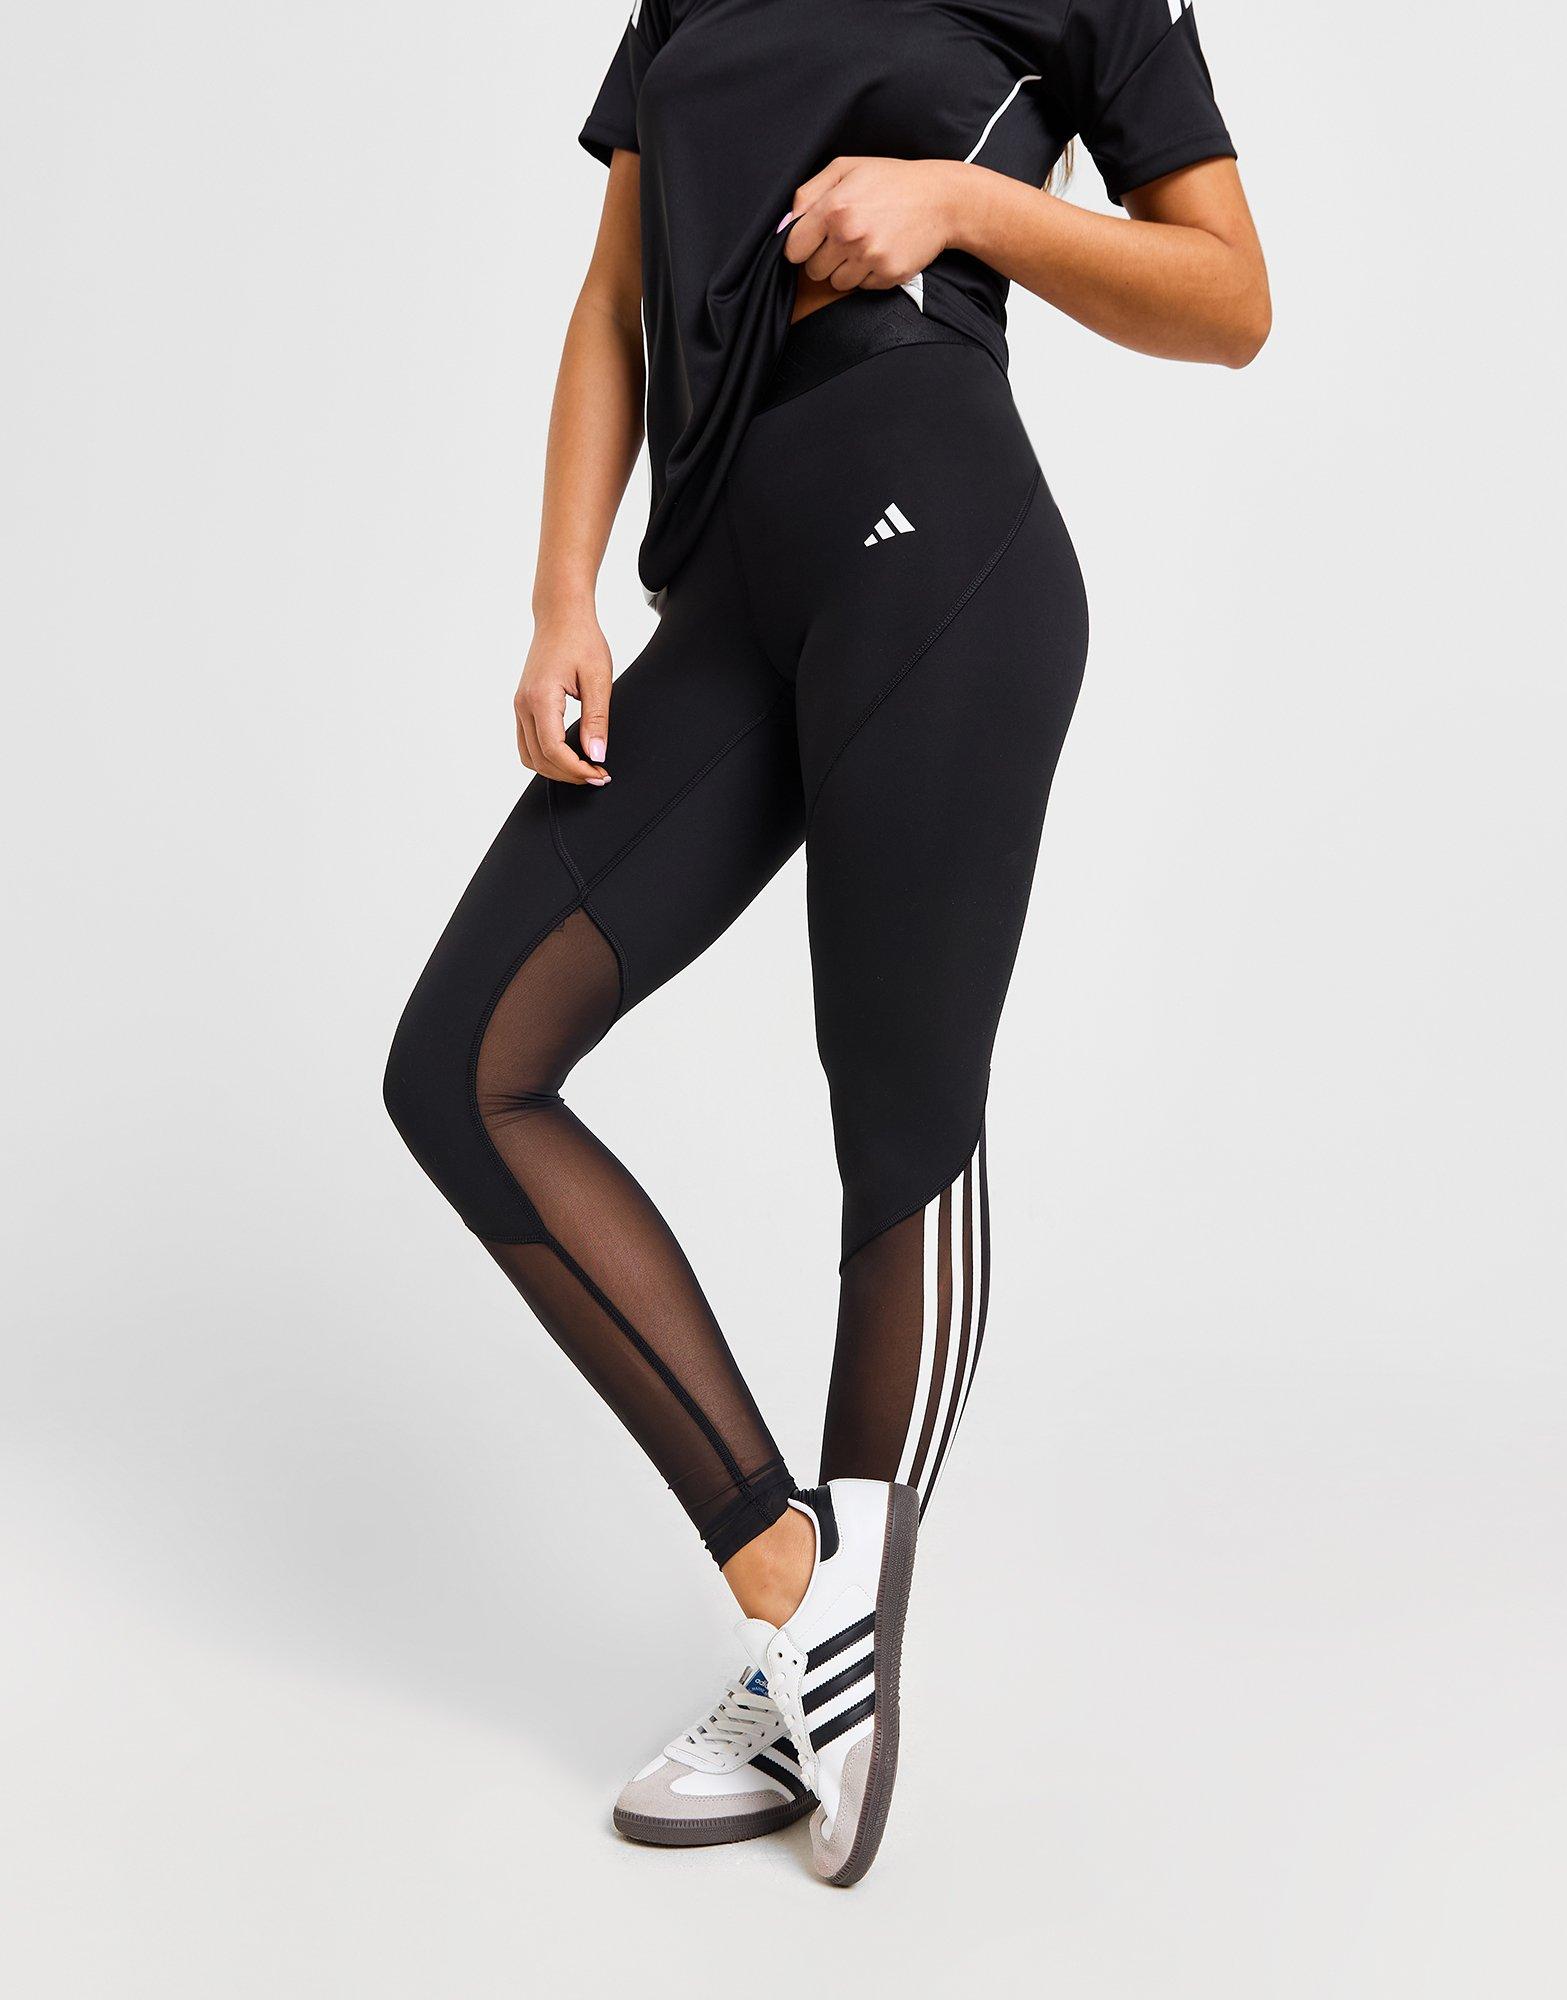 Faulty Adidas 3 Stripes Womens Black Leggings Gym pants size  8,10,12,14,16,18